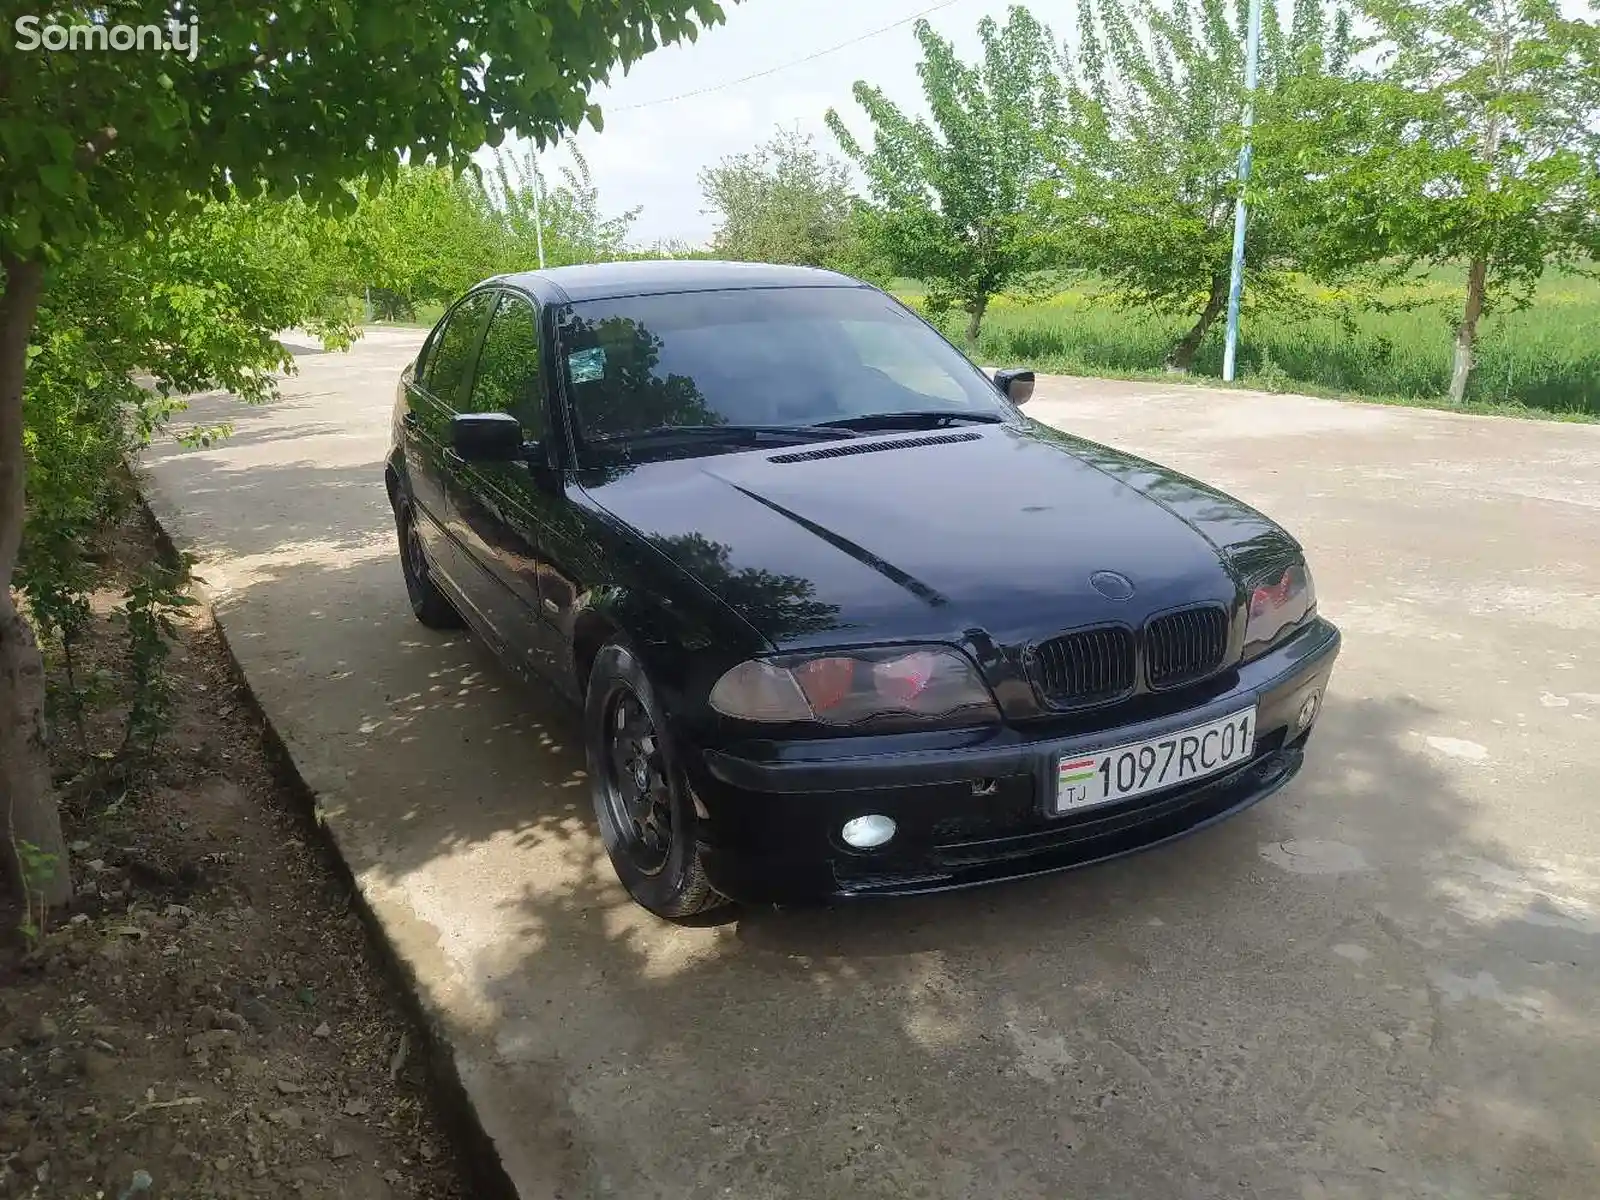 BMW 3 series, 2001-2